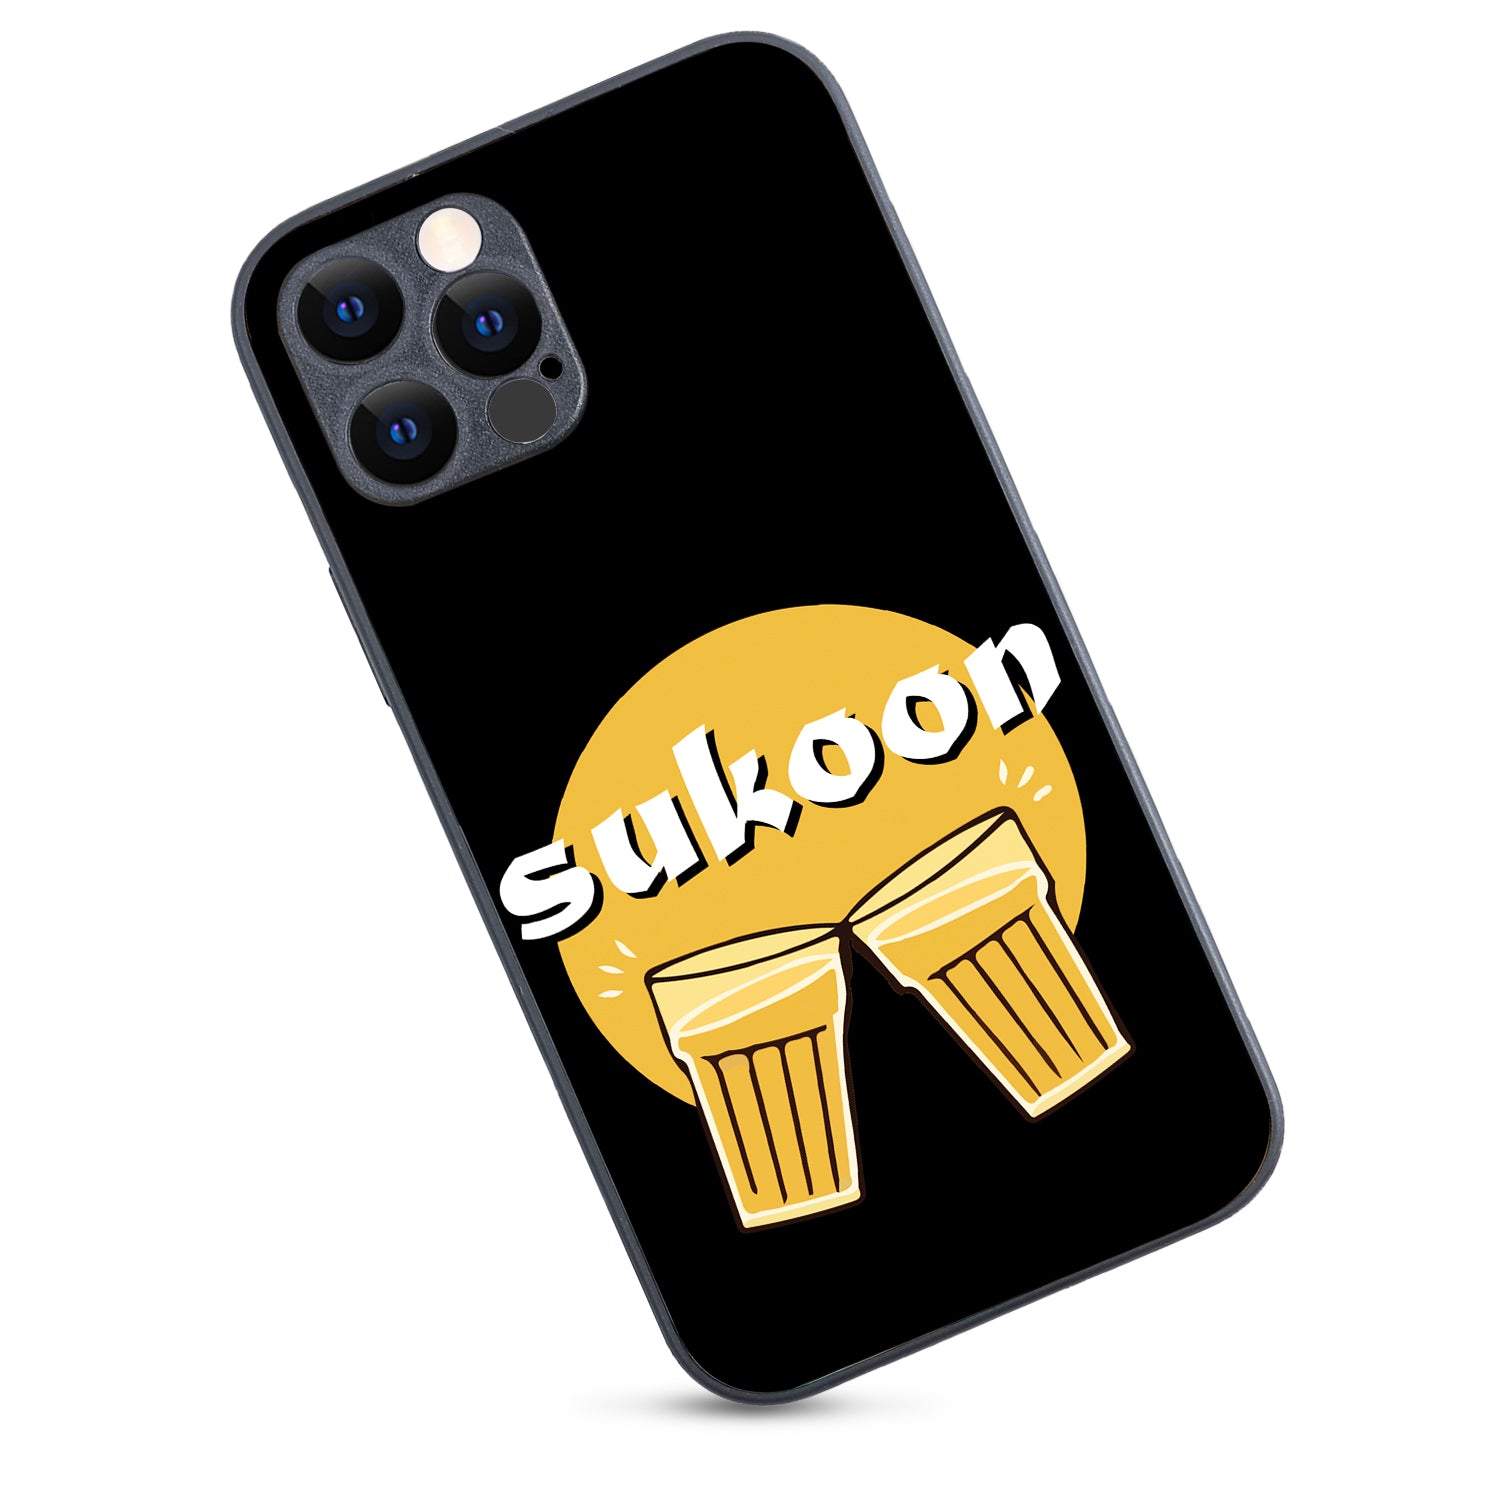 Sukoon Uniword iPhone 12 Pro Case